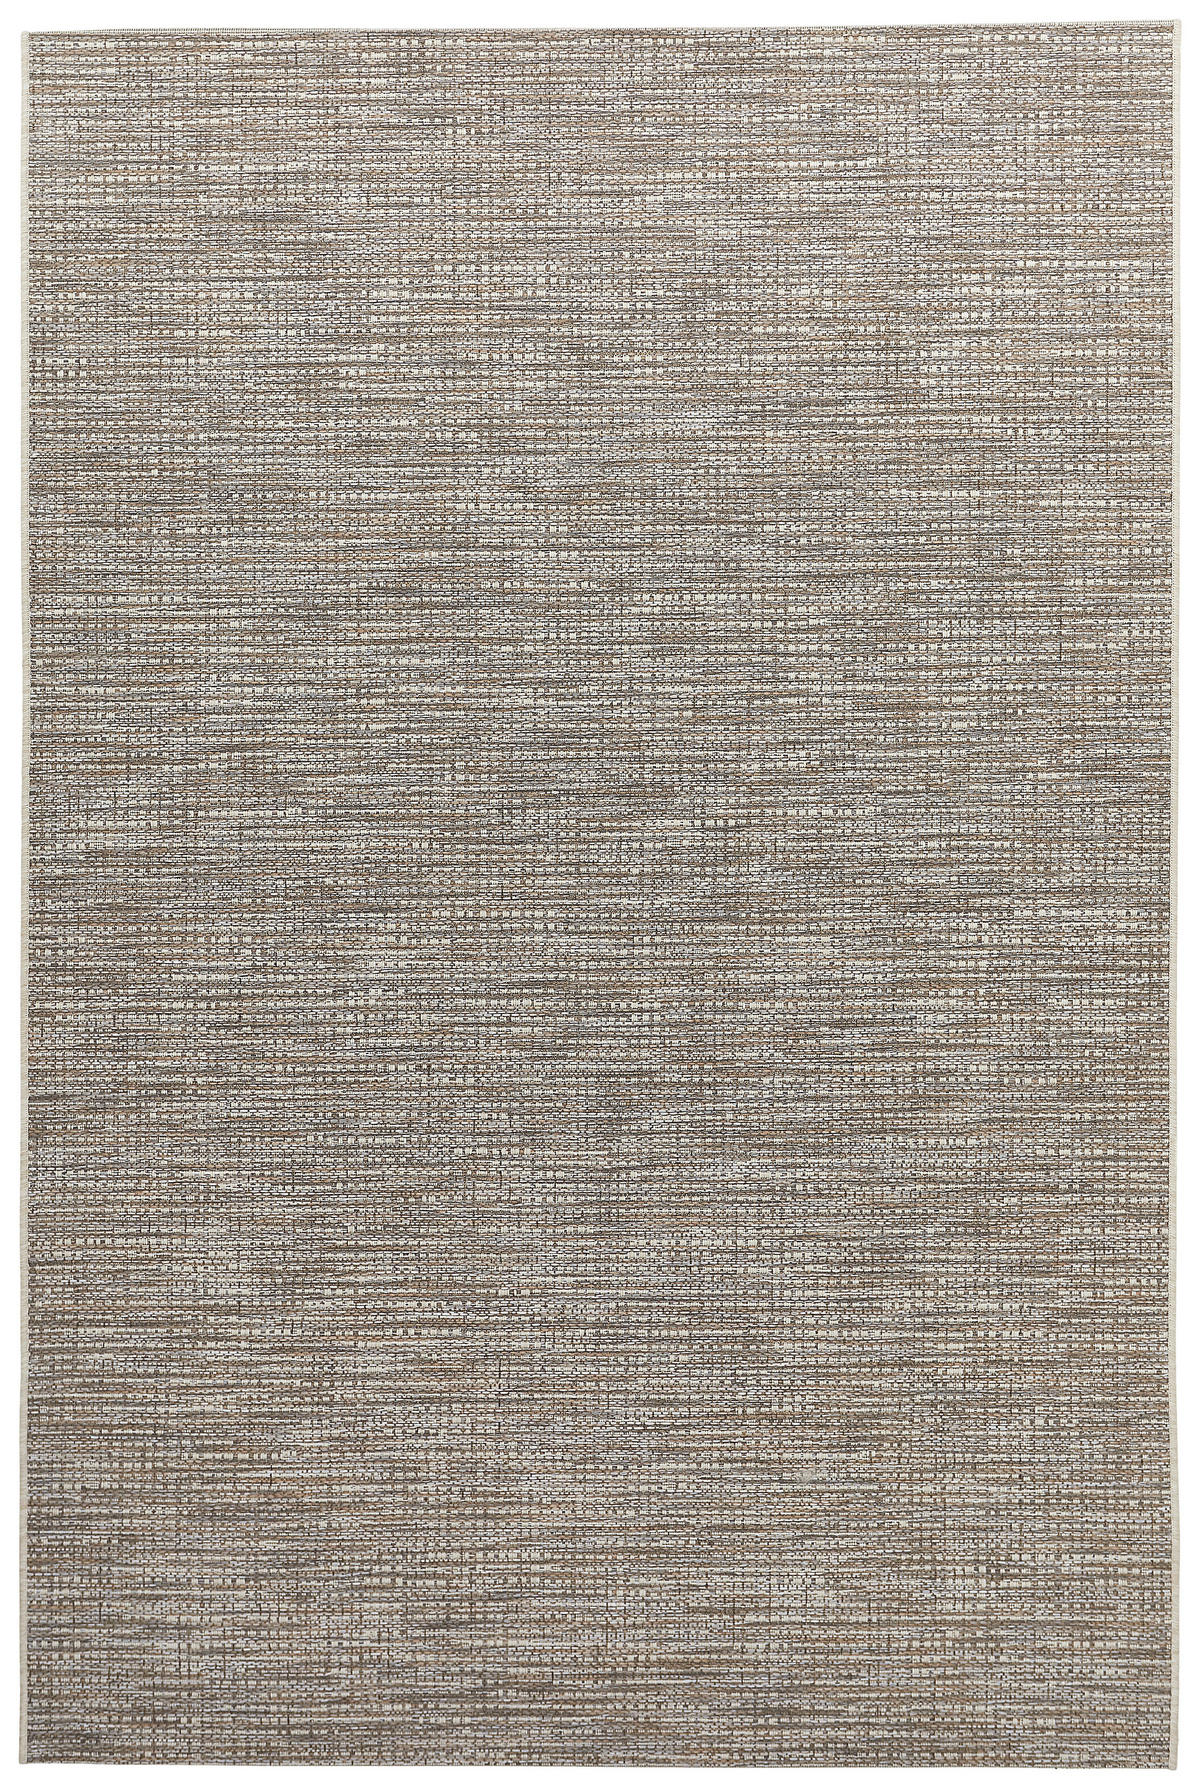 FLACHWEBETEPPICH 160/230 cm  - Grau, Design, Textil (160/230cm) - Novel